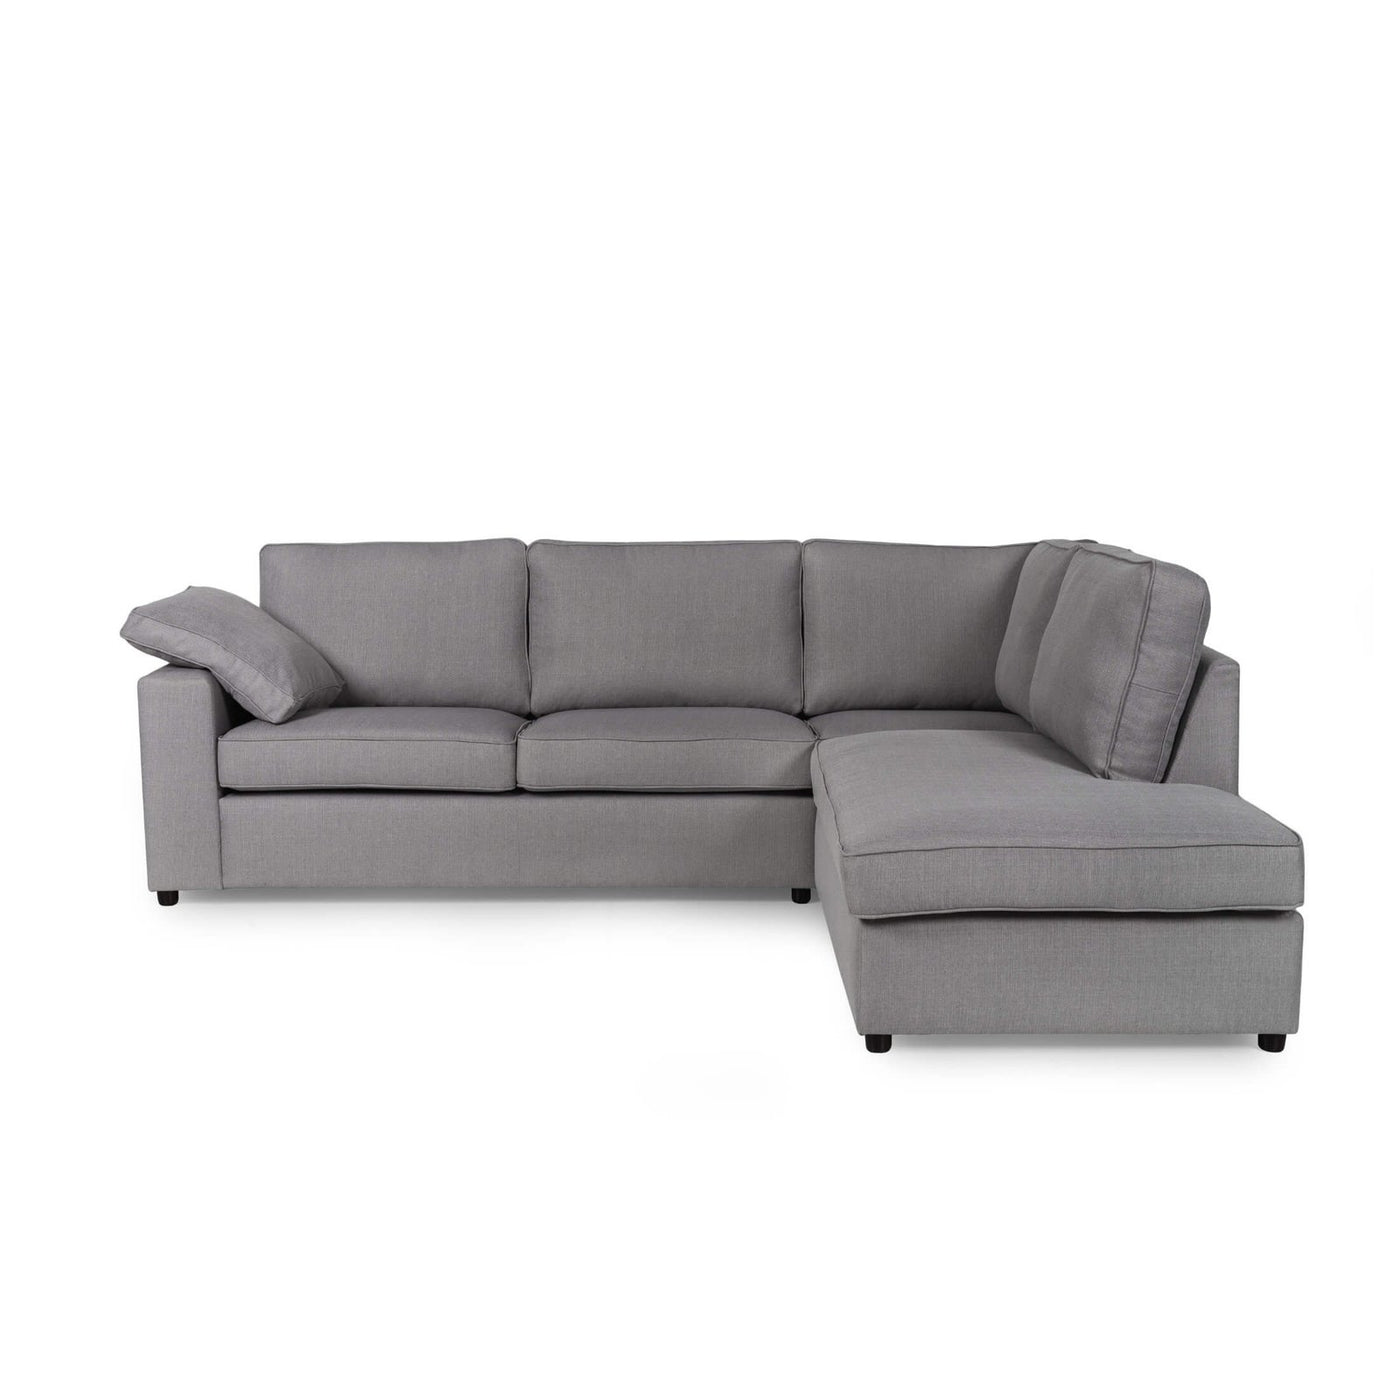 Alton Fabric Corner Sofa - Grab Some Furniture